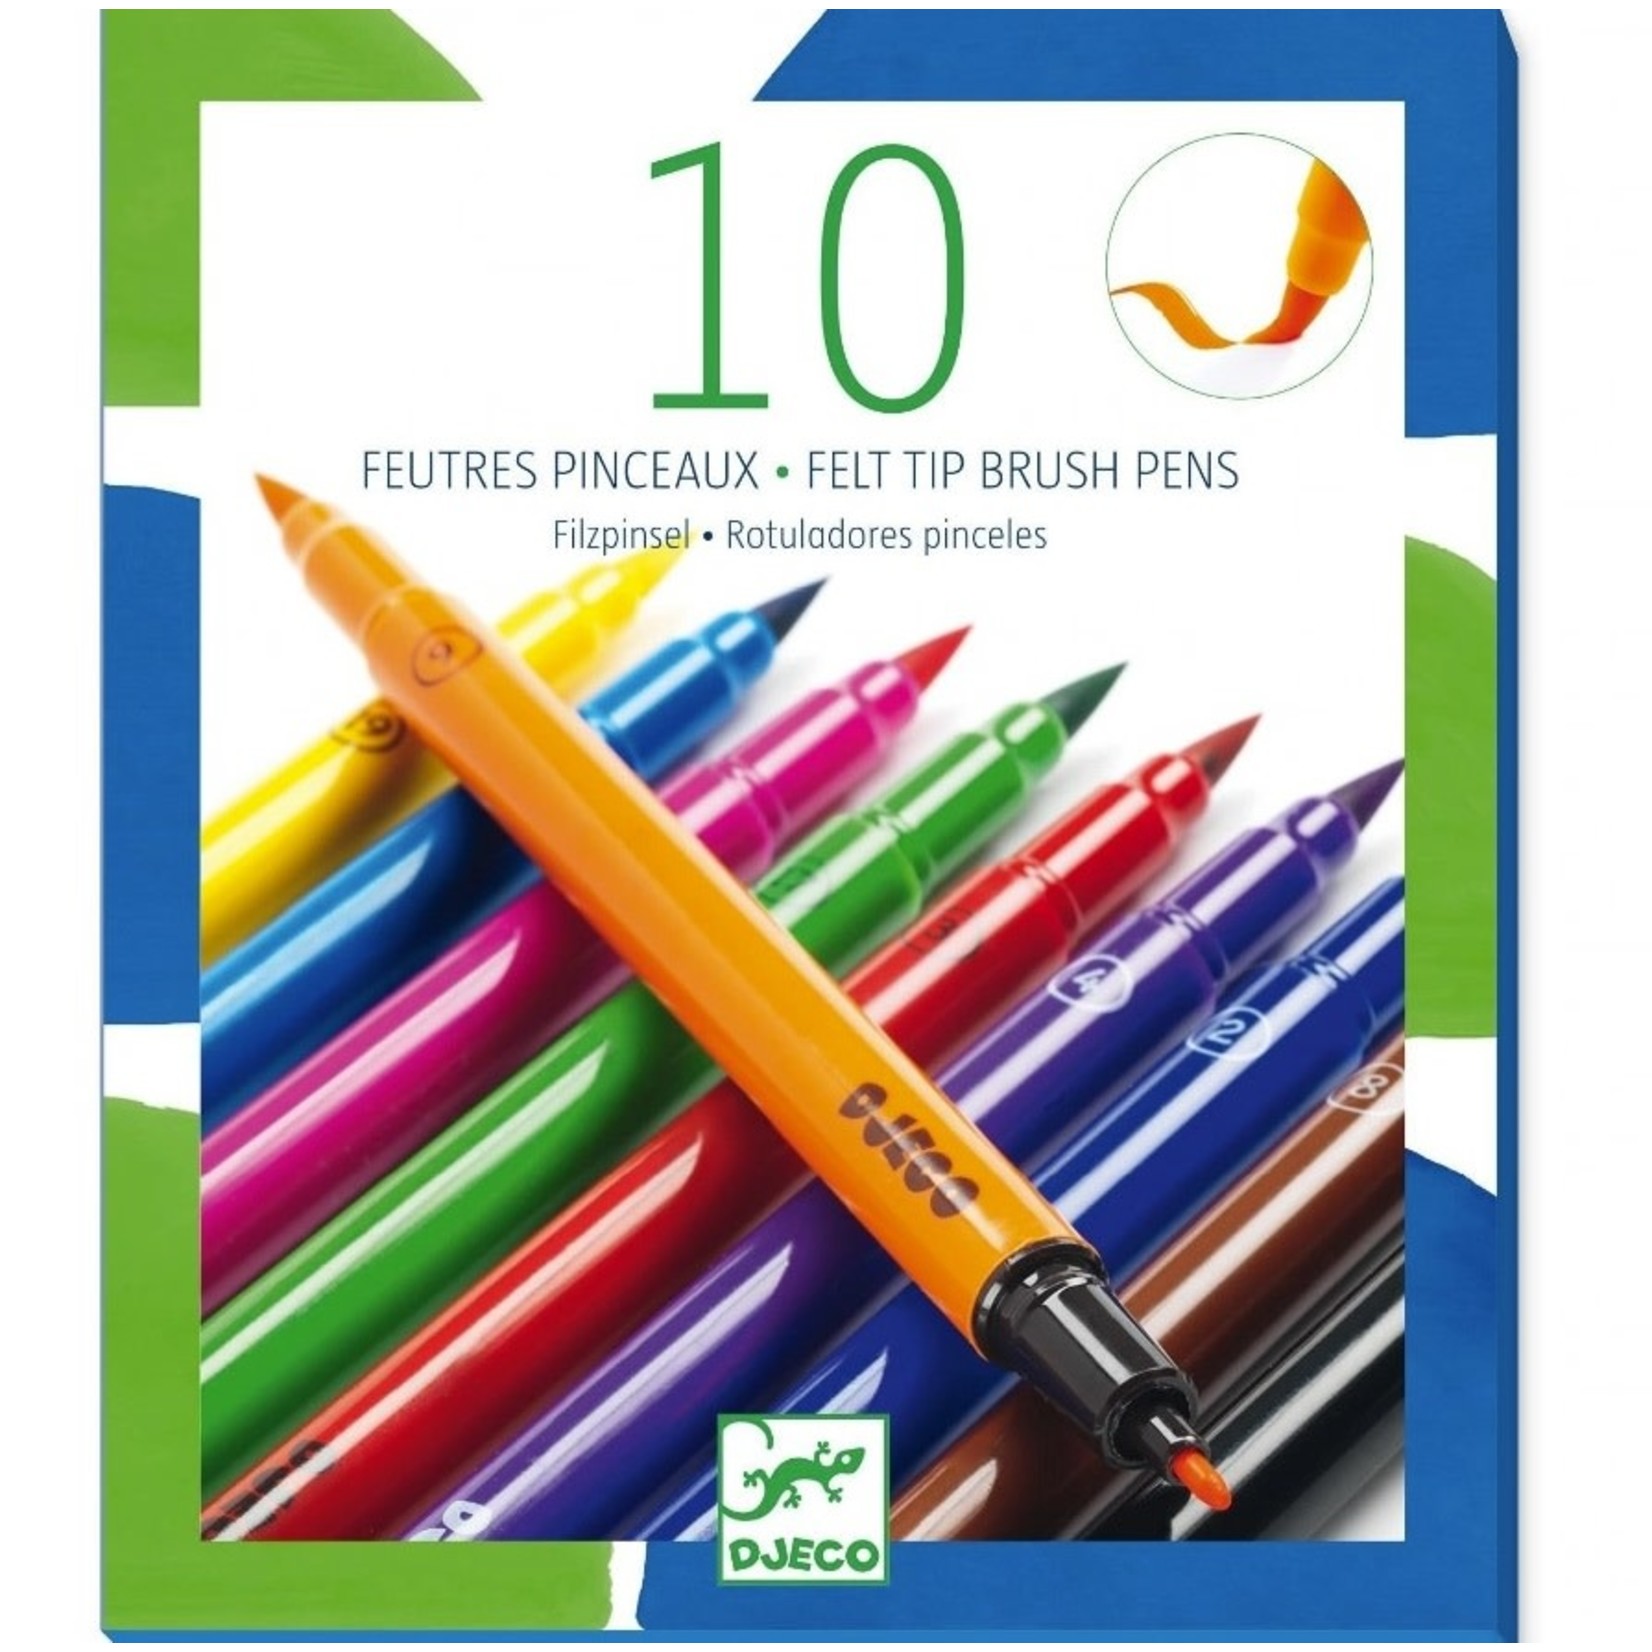 Djeco DJECO - 10 Felt Tip Brush Pens - Classic